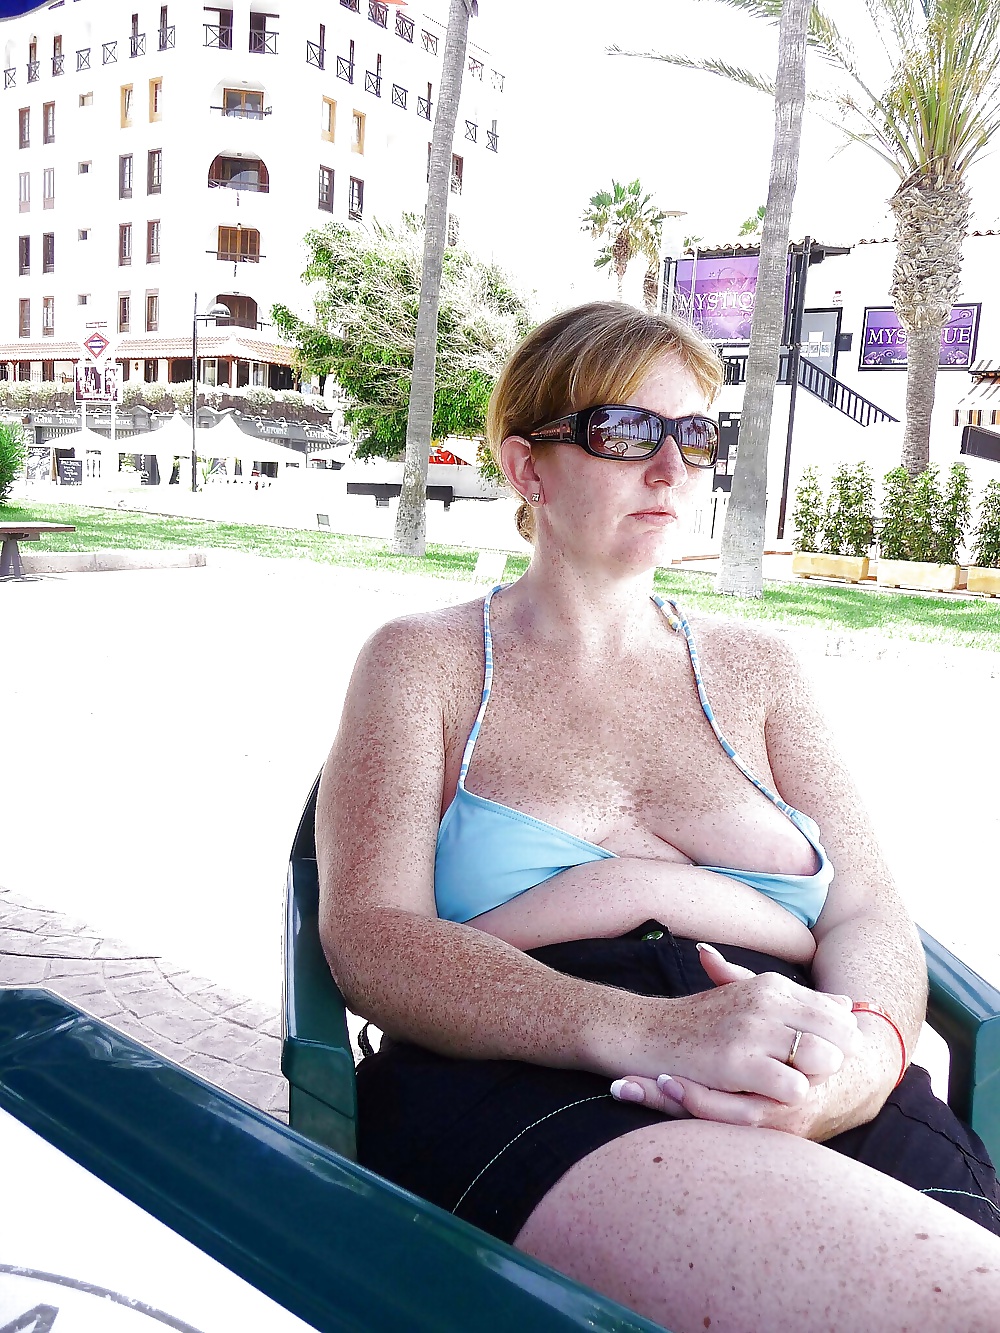 Bikini Beach Topless Sexy dressed 2 adult photos